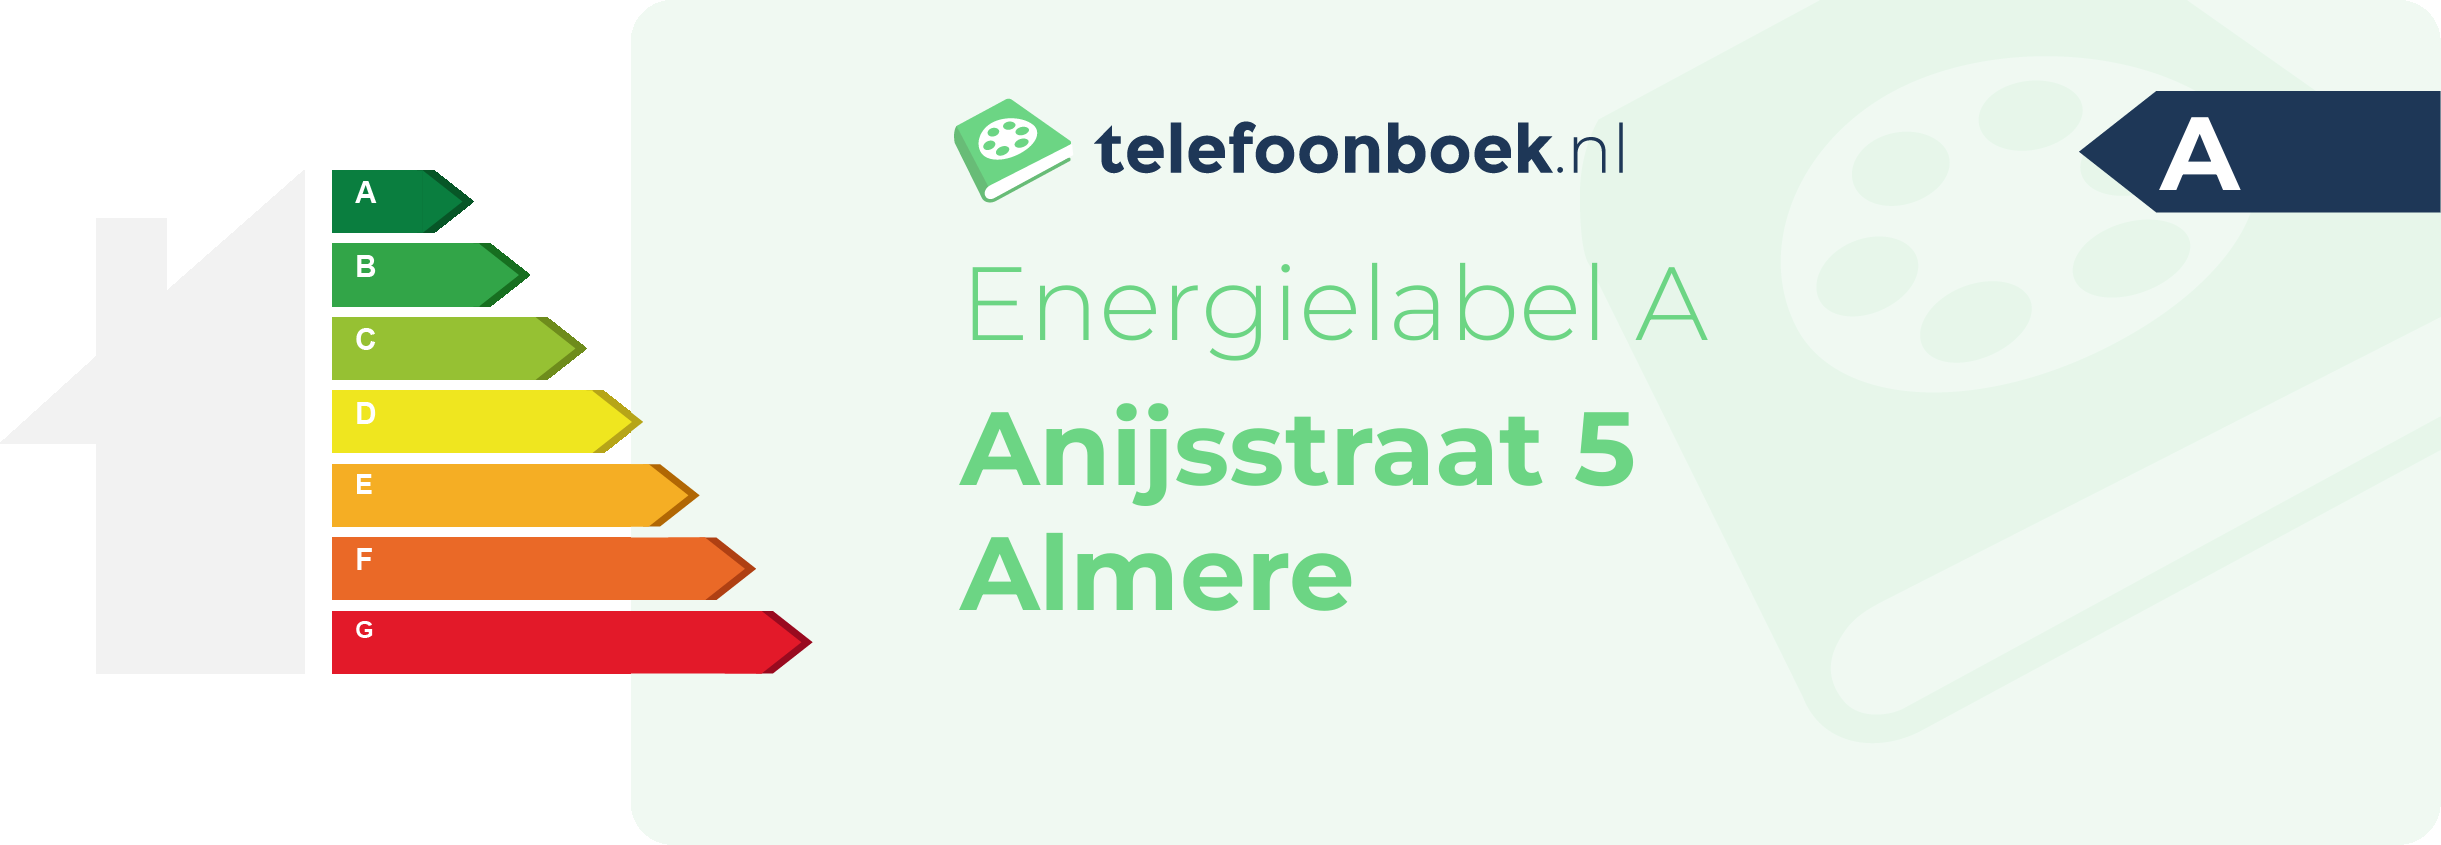 Energielabel Anijsstraat 5 Almere